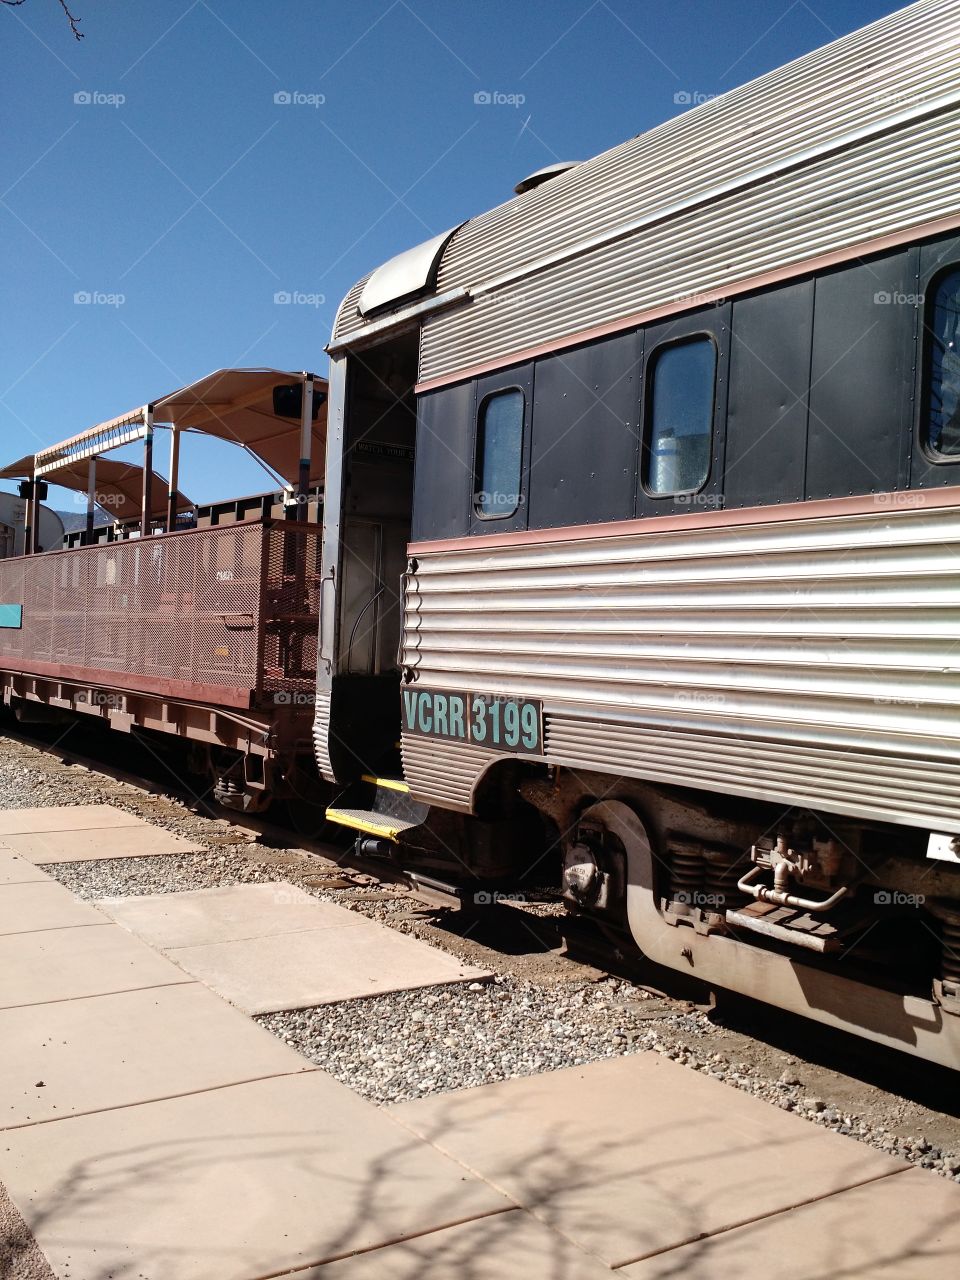 train in AZ. train from clarkdale, AZ